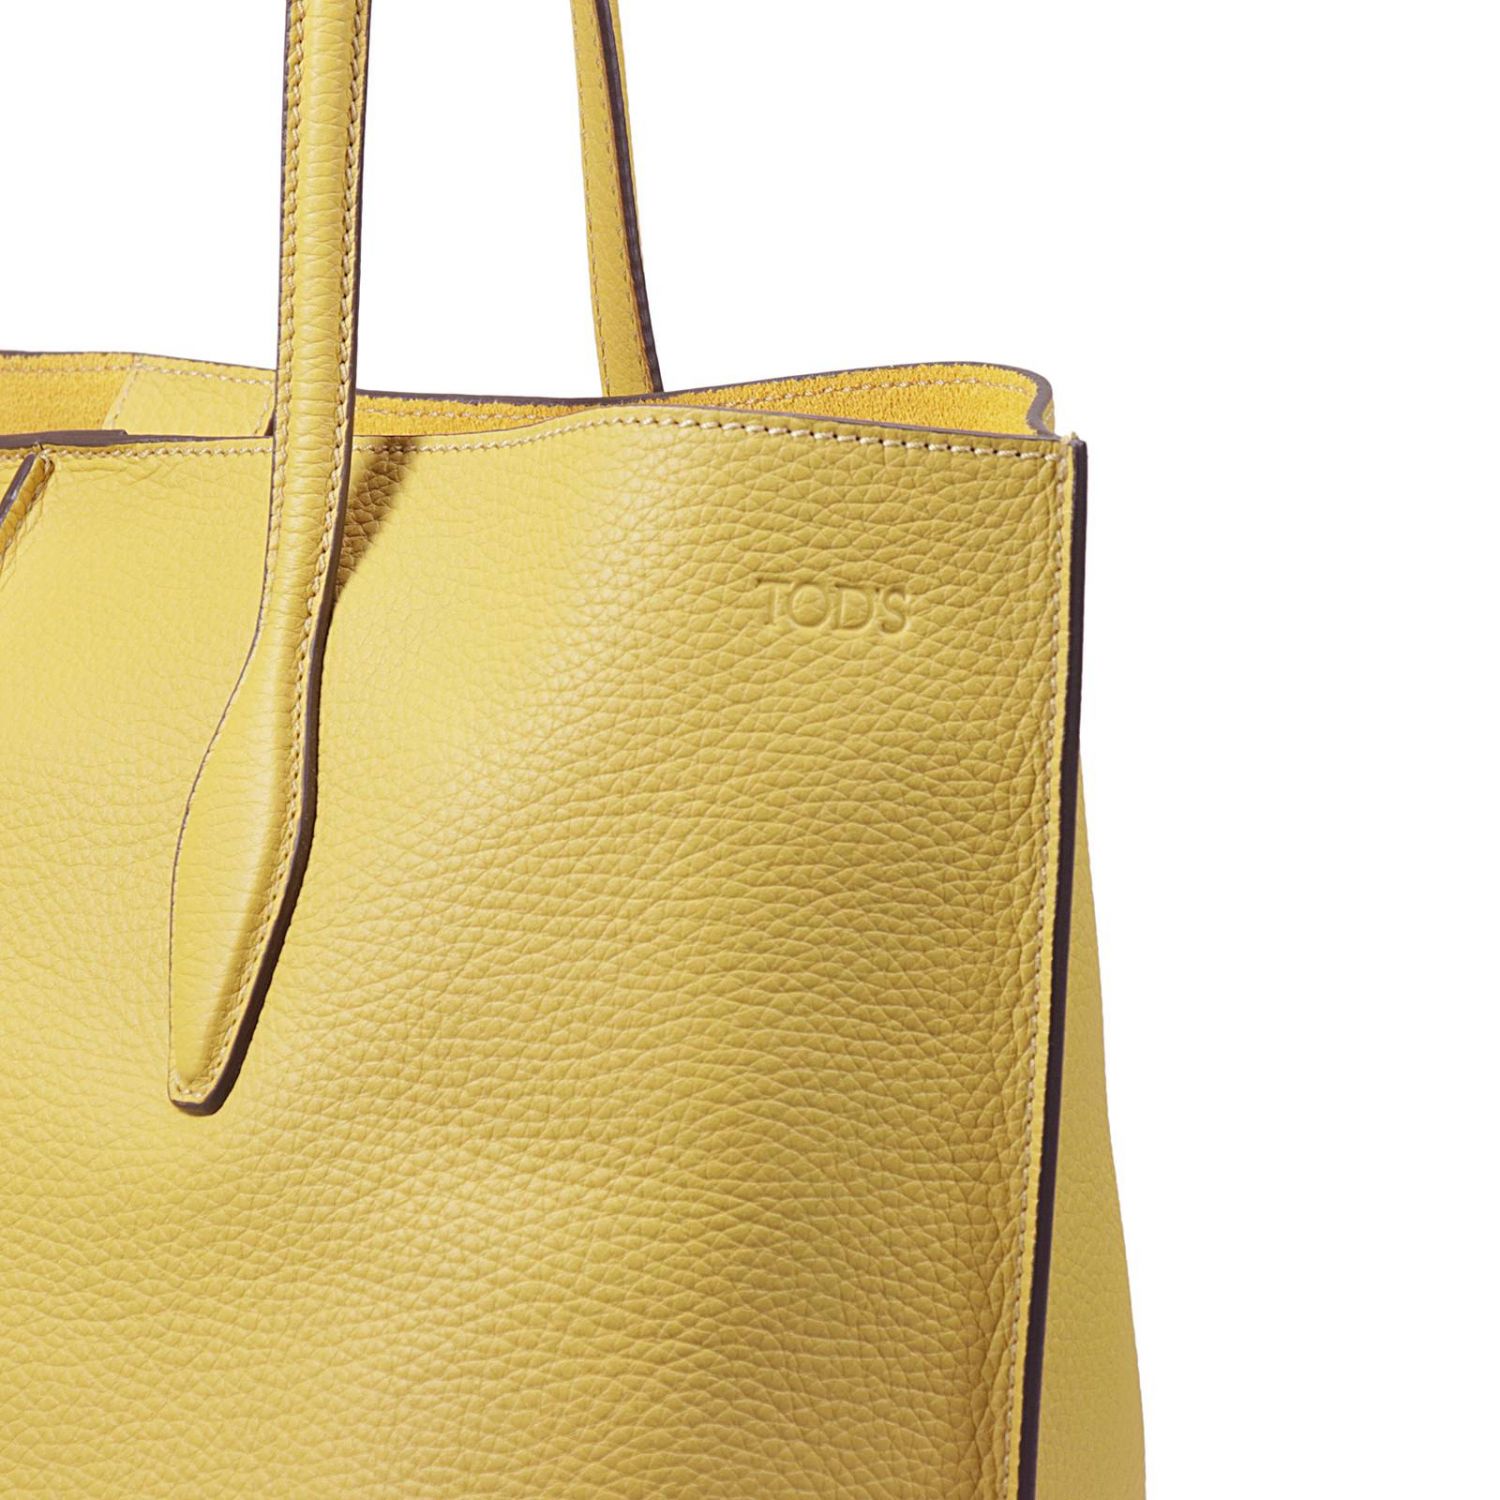 TODS: | Shoulder Bag Tods Women Yellow | Shoulder Bag Tods xbwamfav300 ...